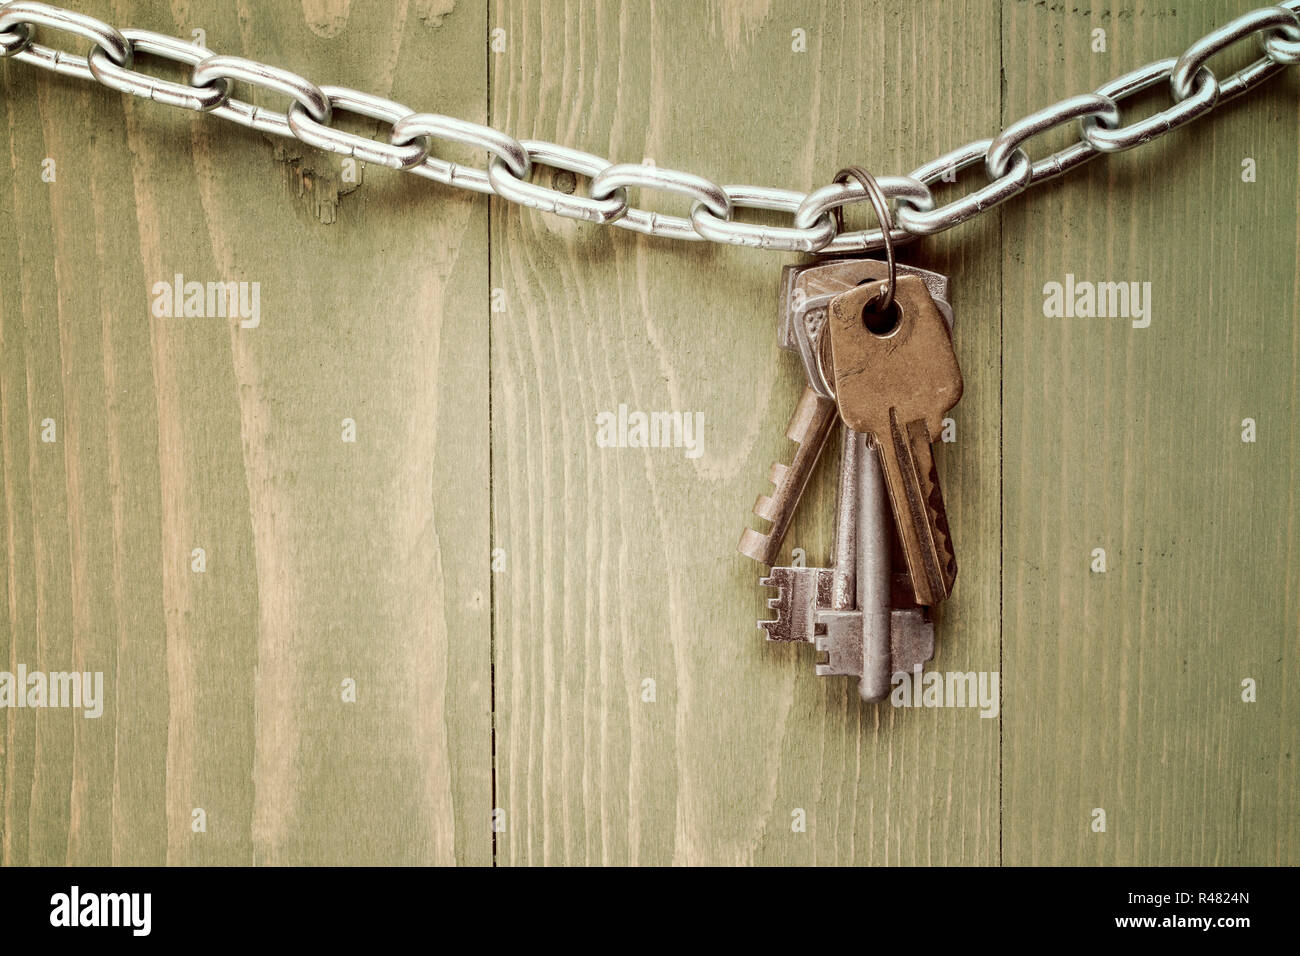 Keys hanging on chain Stock Photo